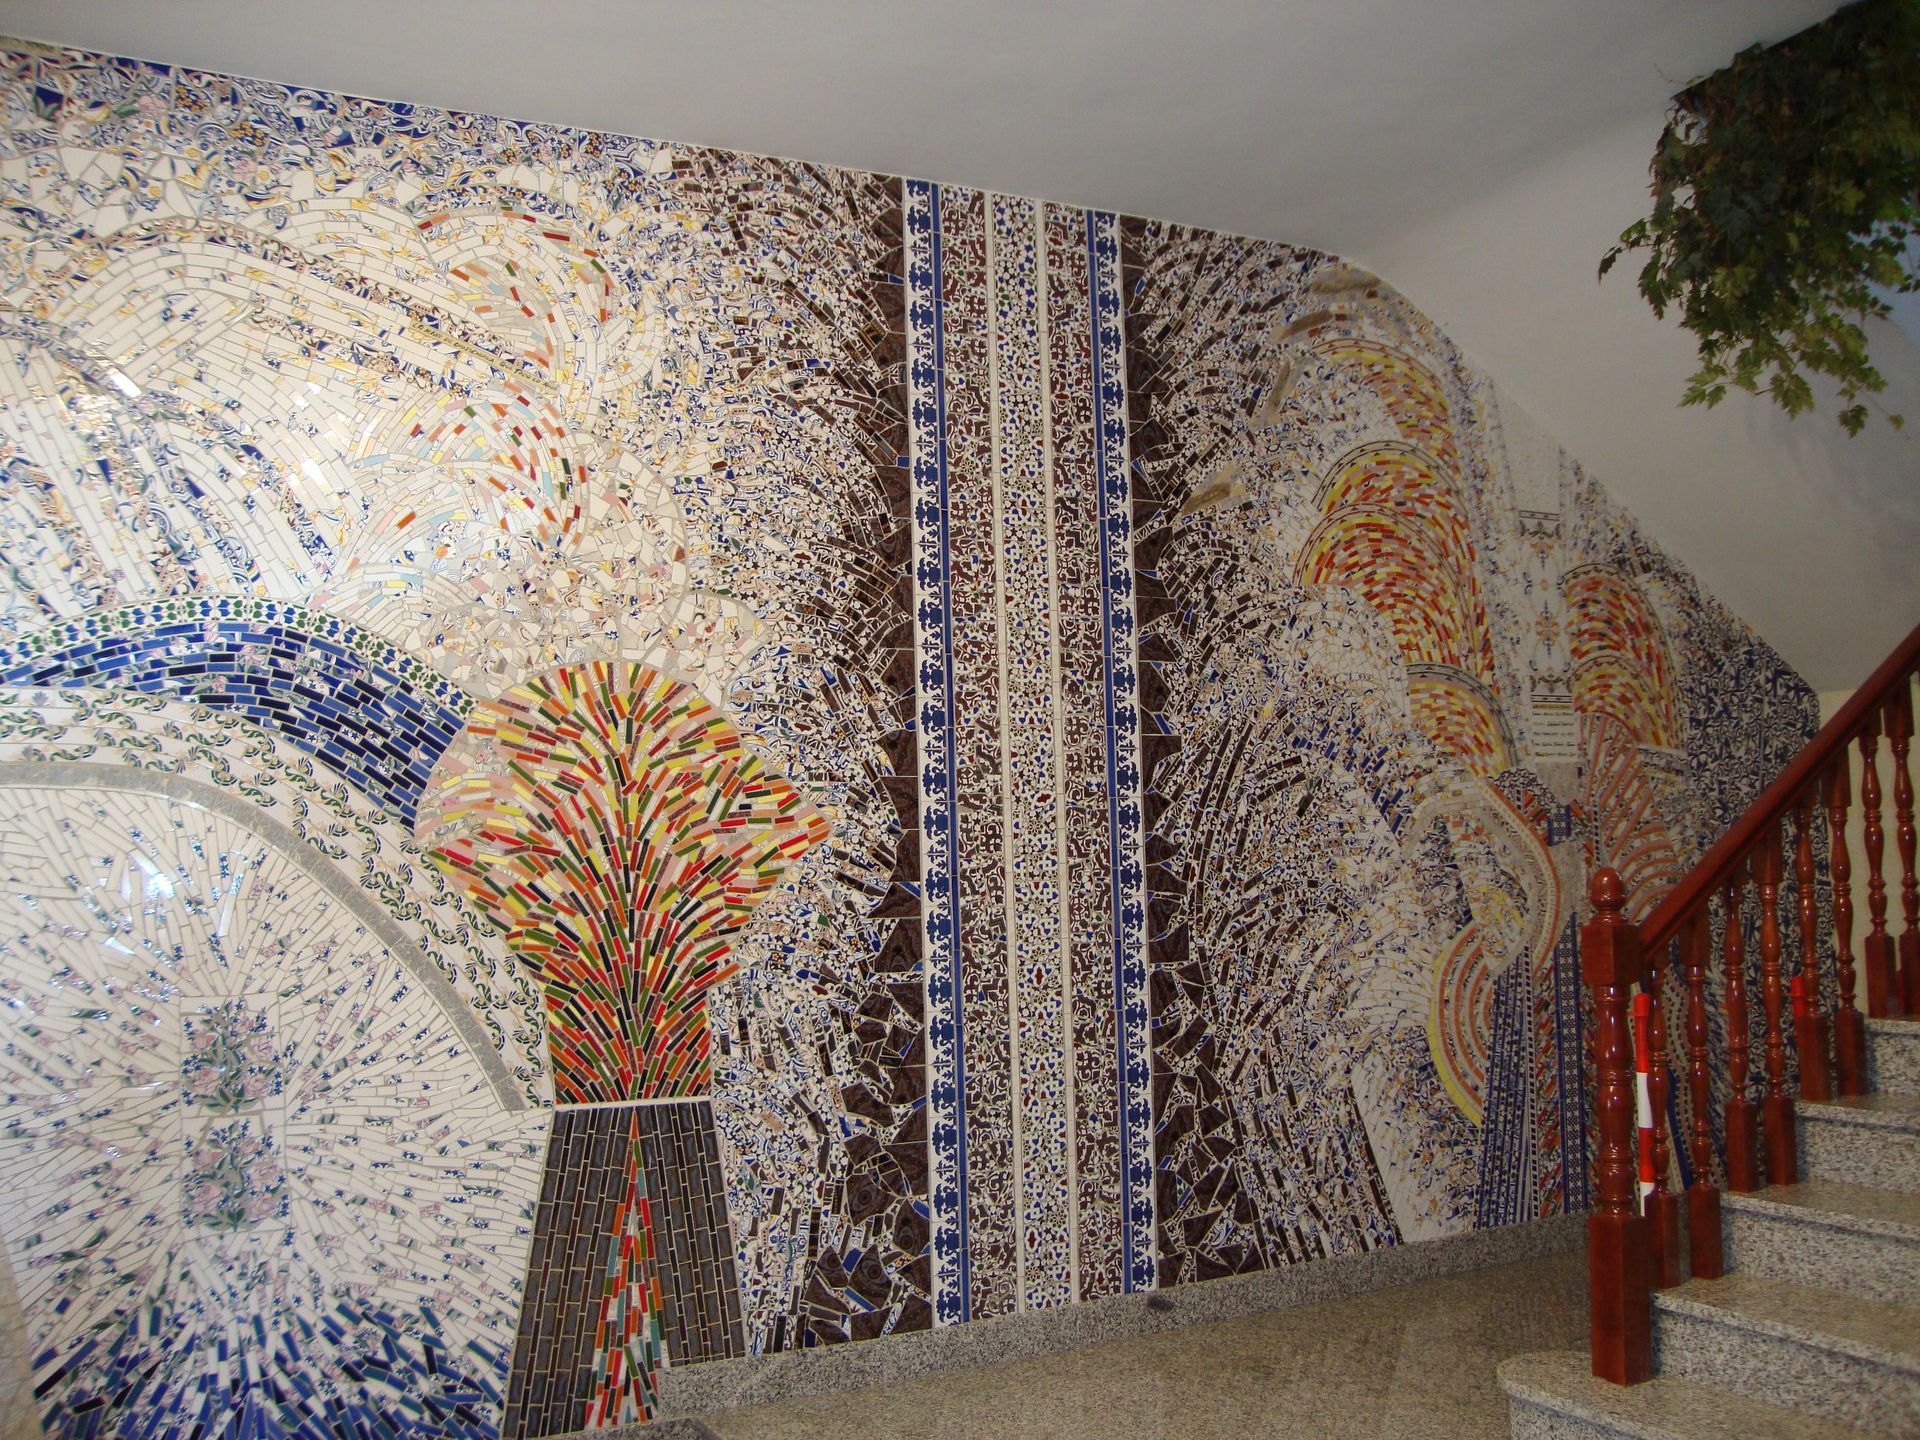 El mural de Espinoza